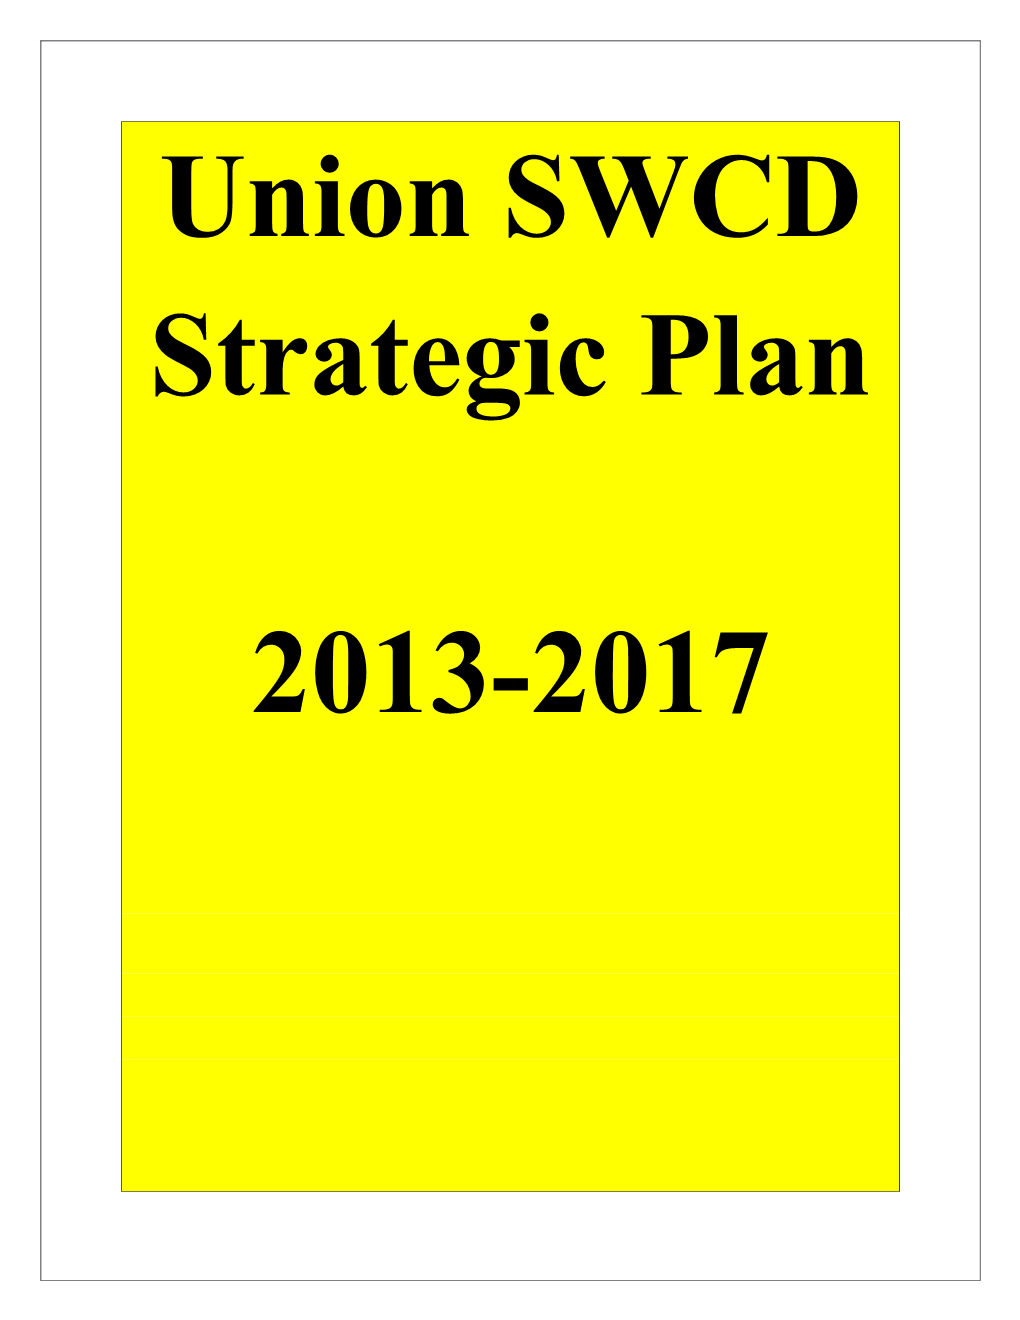 Union SWCD Strategic Plan 2013-2017